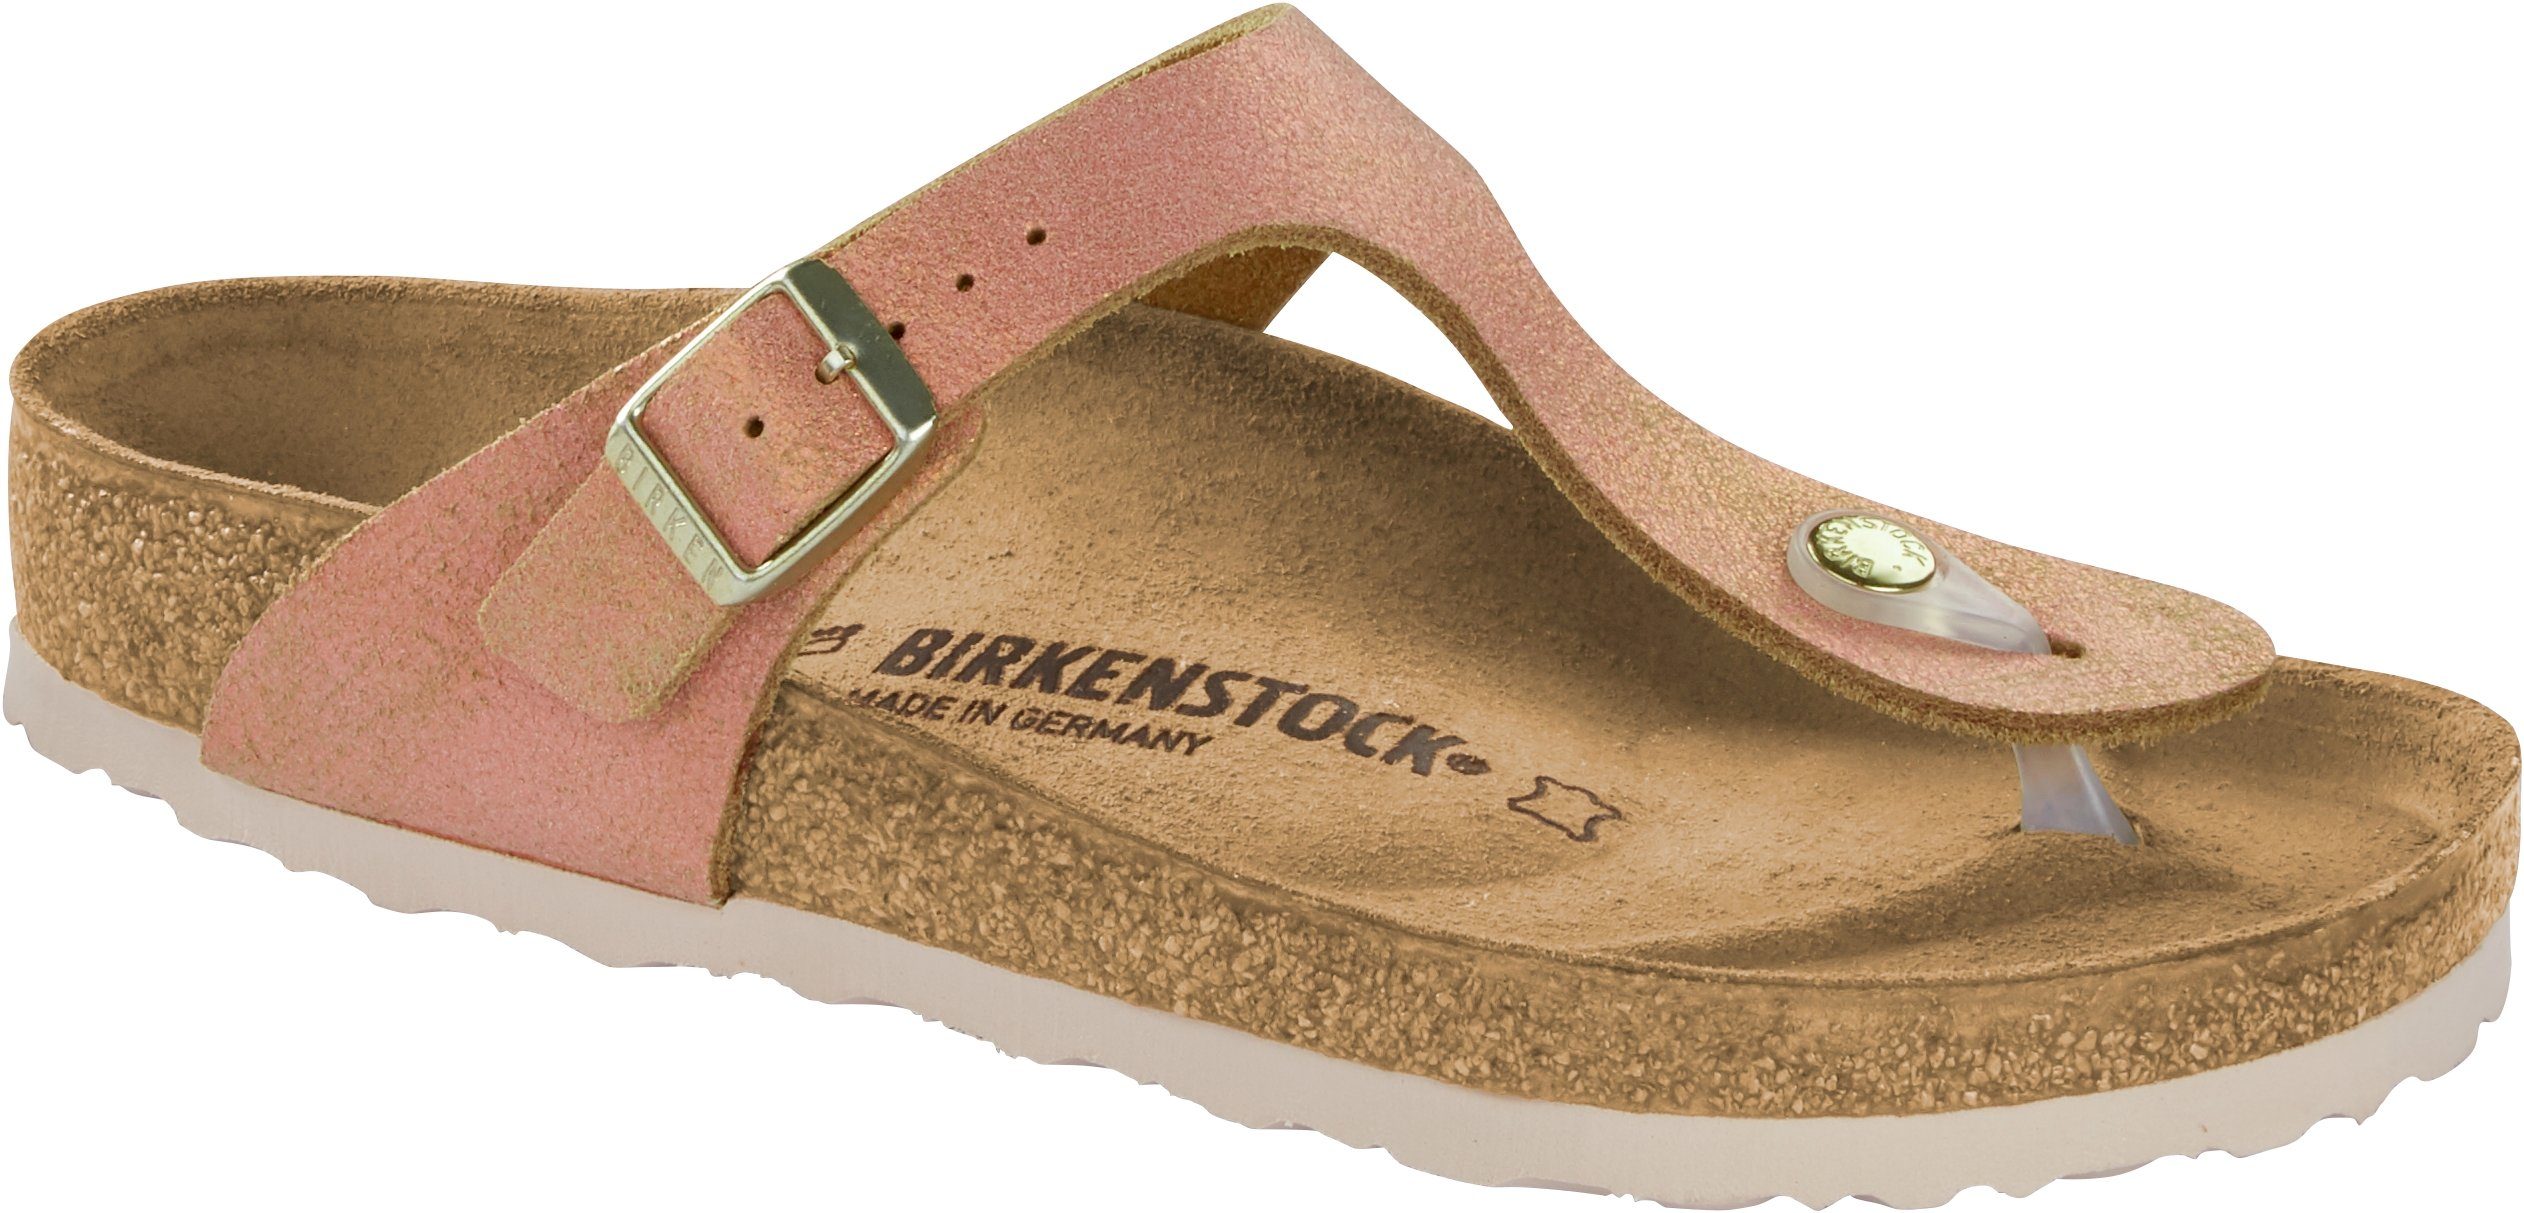 Birkenstock »BIRKENSTOCK Zehensteg Gizeh VL washed metallic sea copper  1012910« Pantolette online kaufen | OTTO